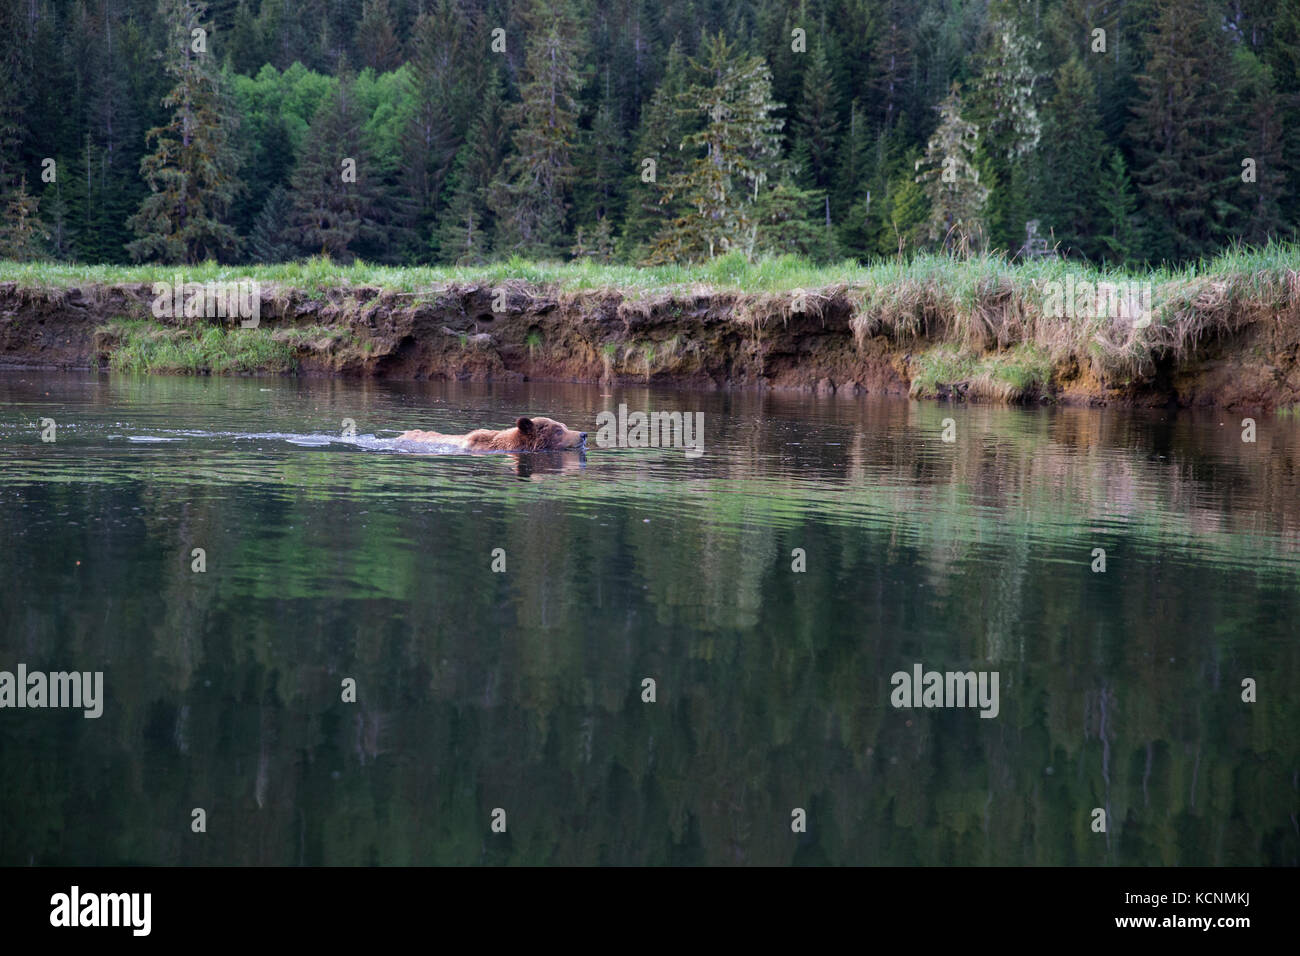 Oso grizzly (Ursus arctos) horriblis, grandes cicatrices, natación masculina kwinimass estuario, British Columbia, Canadá. Foto de stock